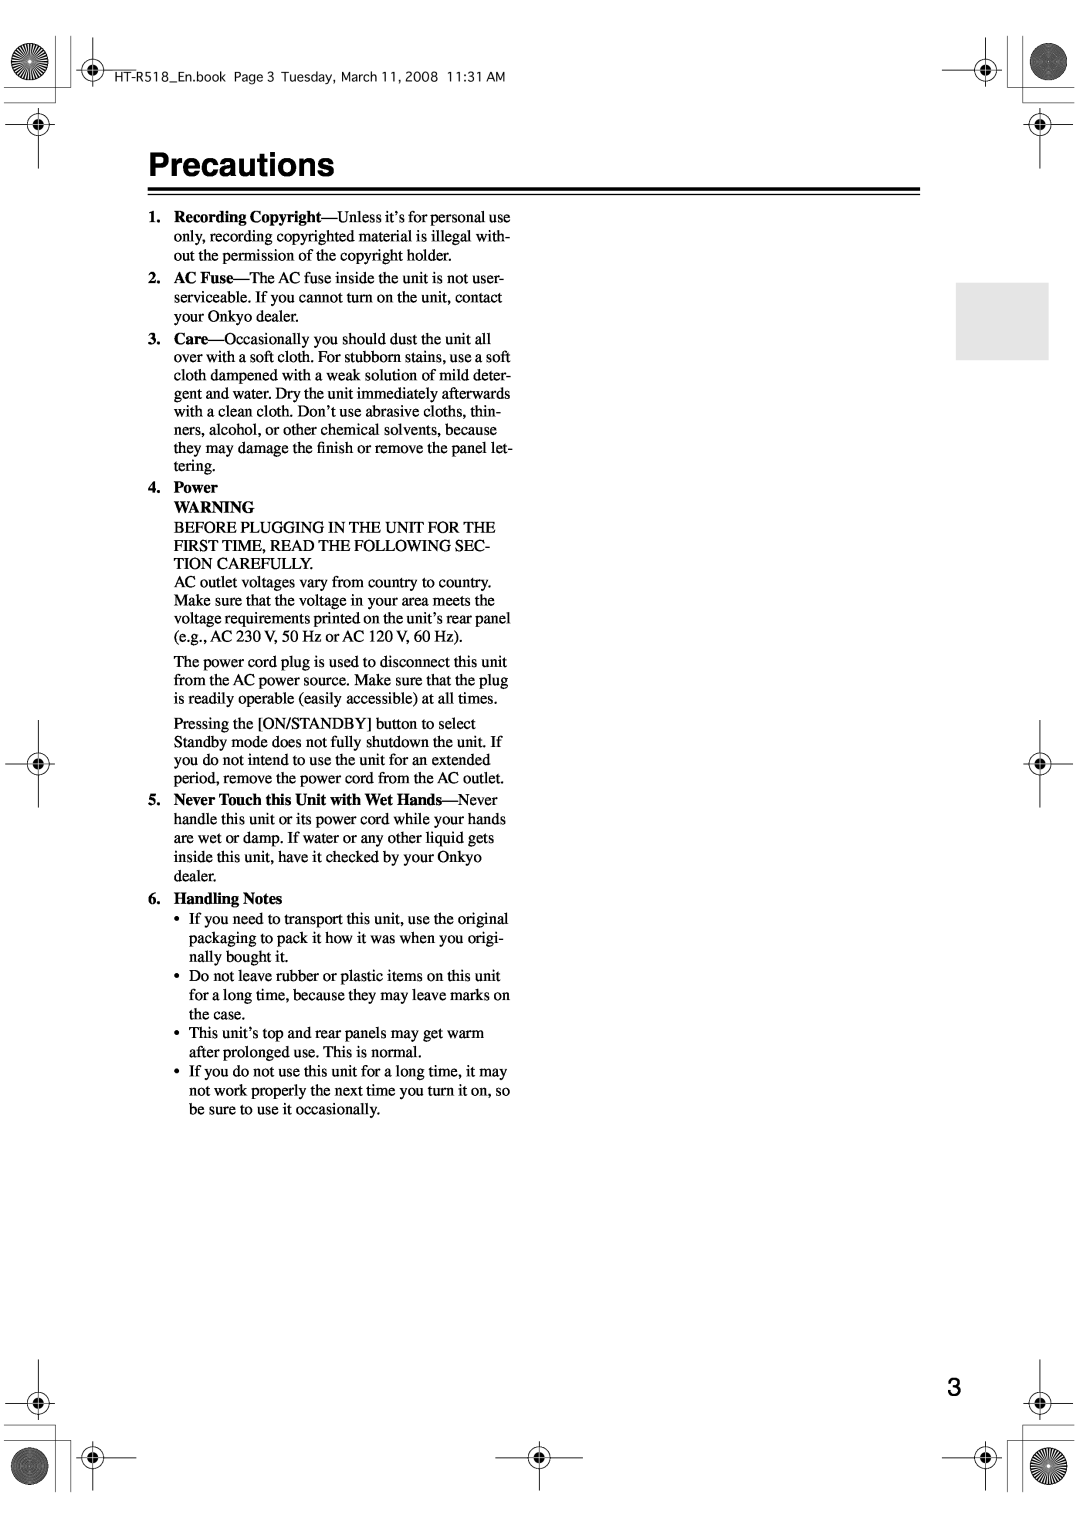 Onkyo HT-R518 instruction manual Precautions, Power, Handling Notes 